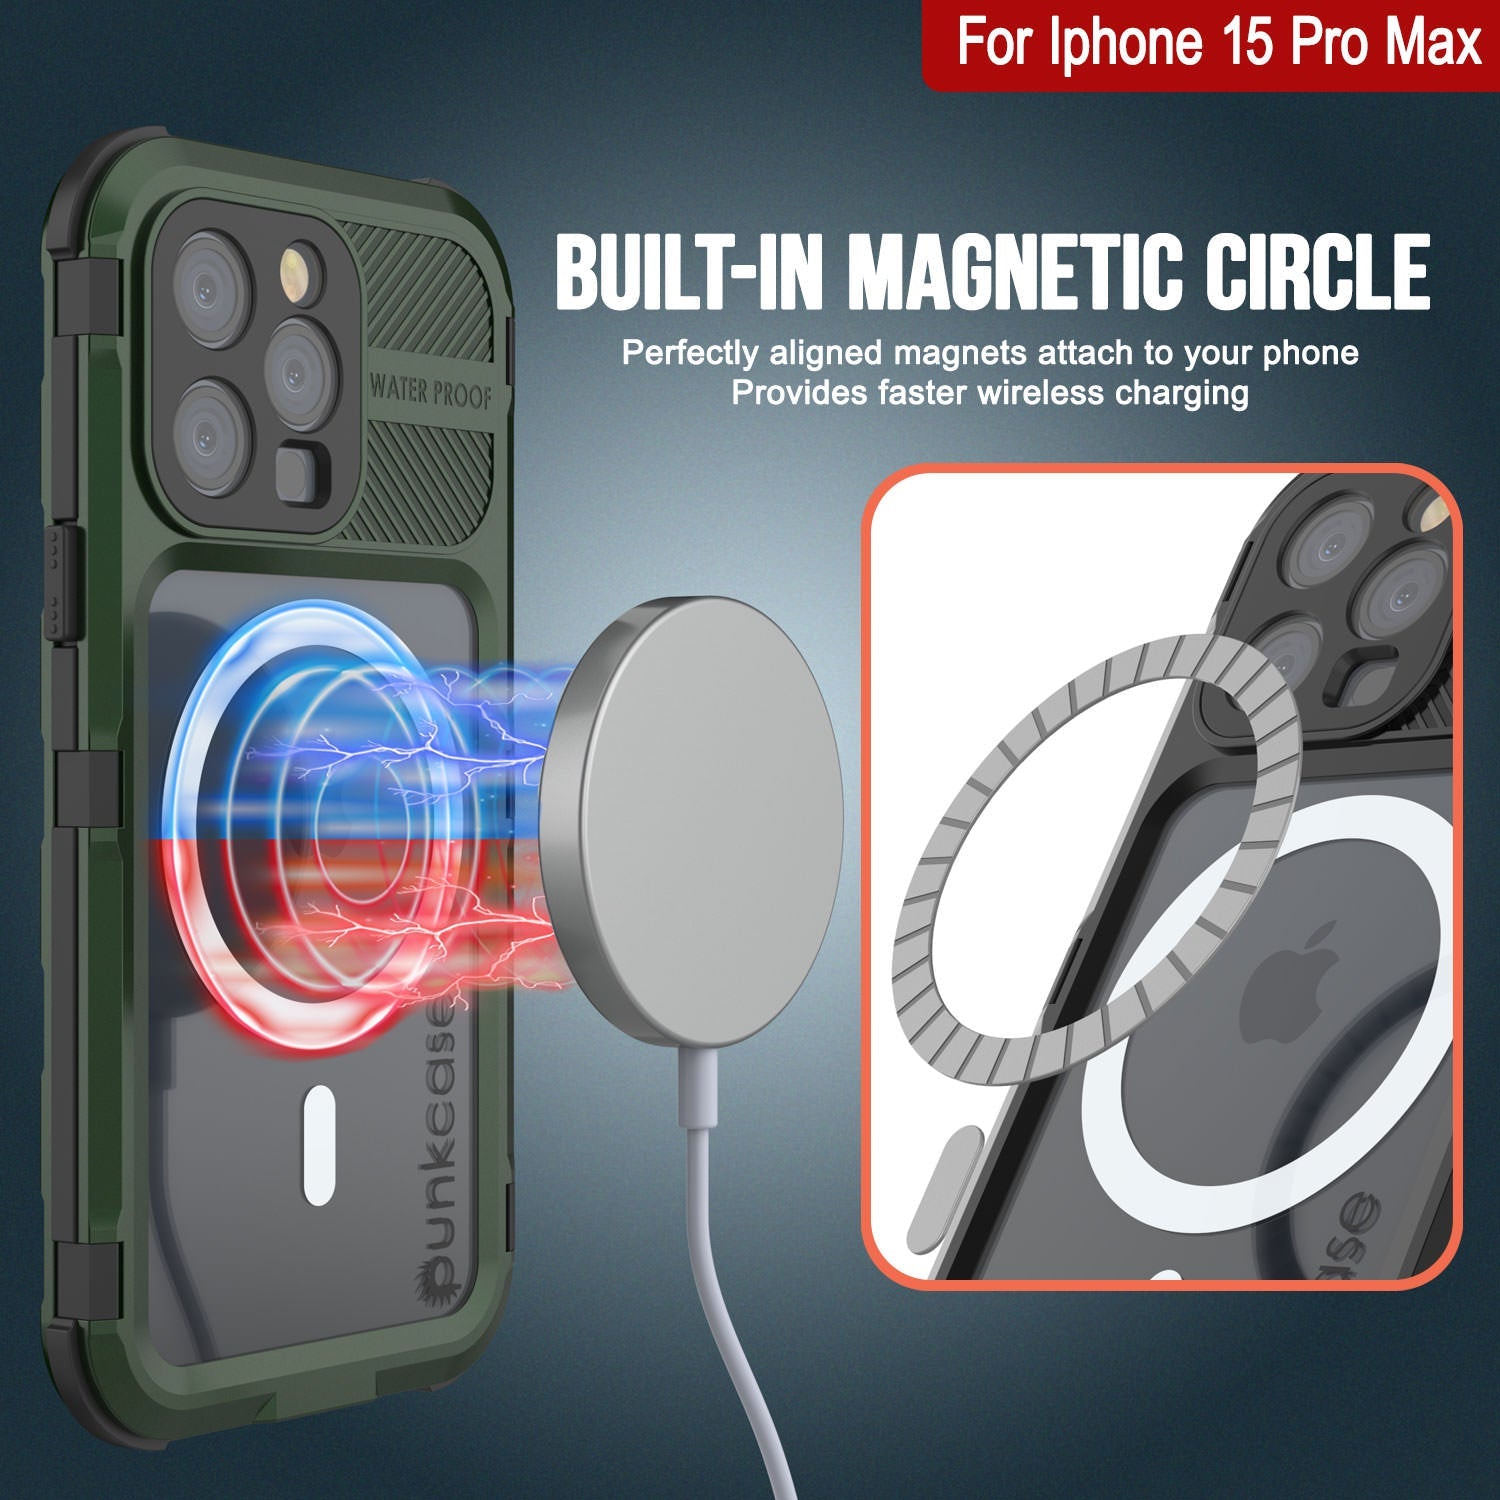 iPhone 15 Pro Max Metal Extreme 2.0 Series Aluminum Waterproof Case IP68 W/Buillt in Screen Protector [Dark Green]